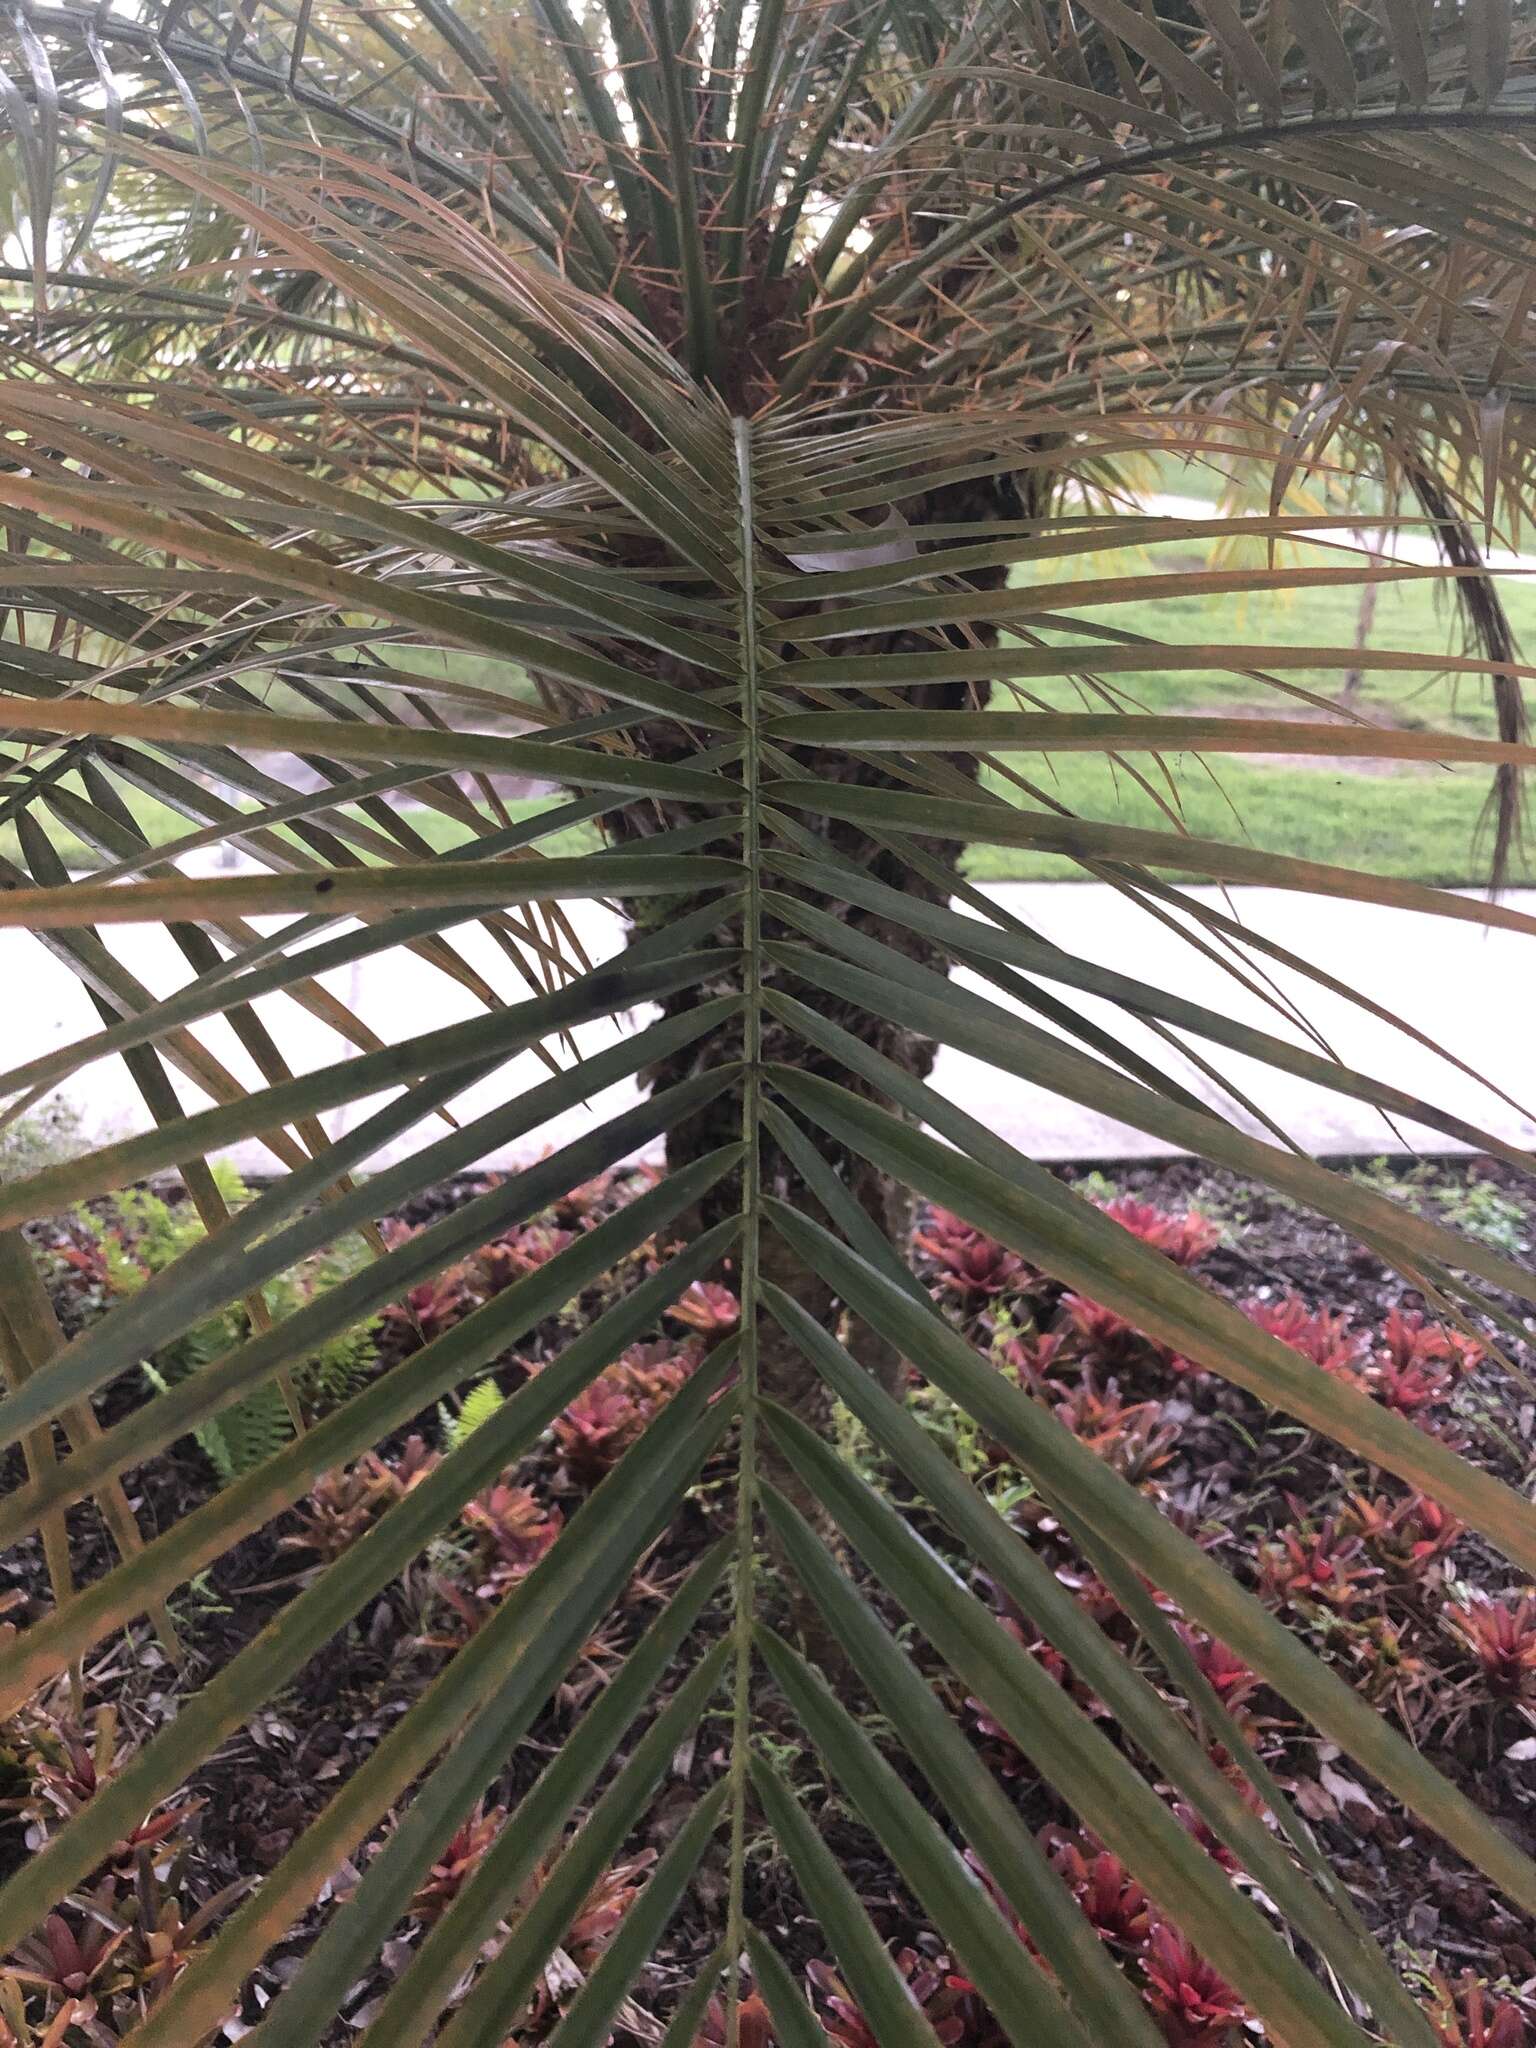 Image of pygmy date palm